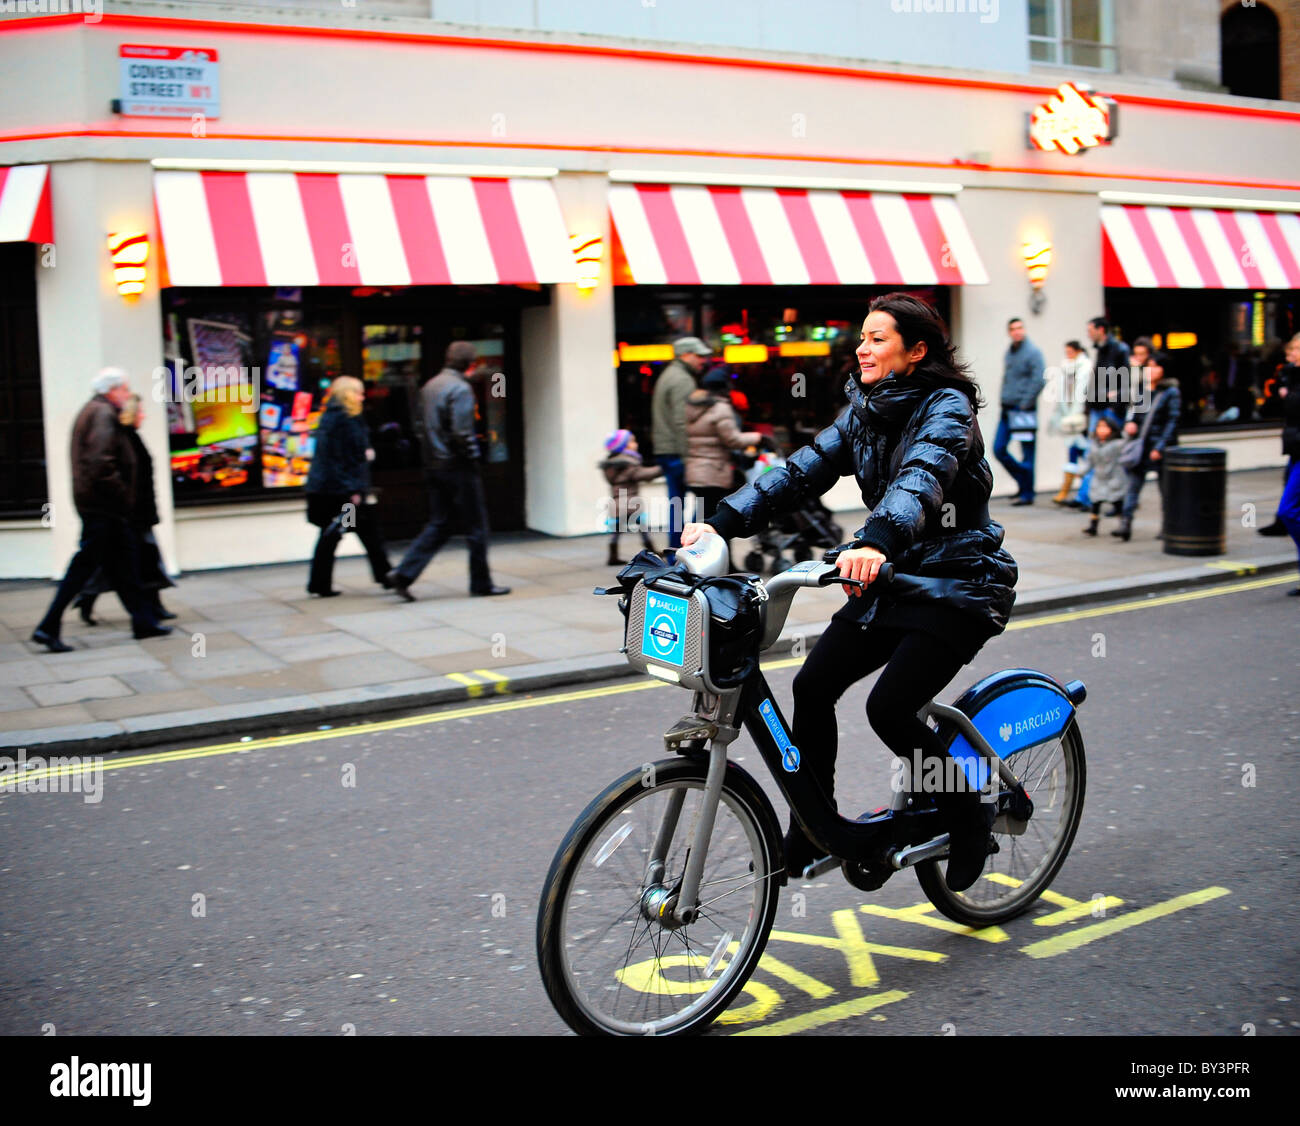 Women riding a hired bicycle (Boris bike) in London Stock Photo